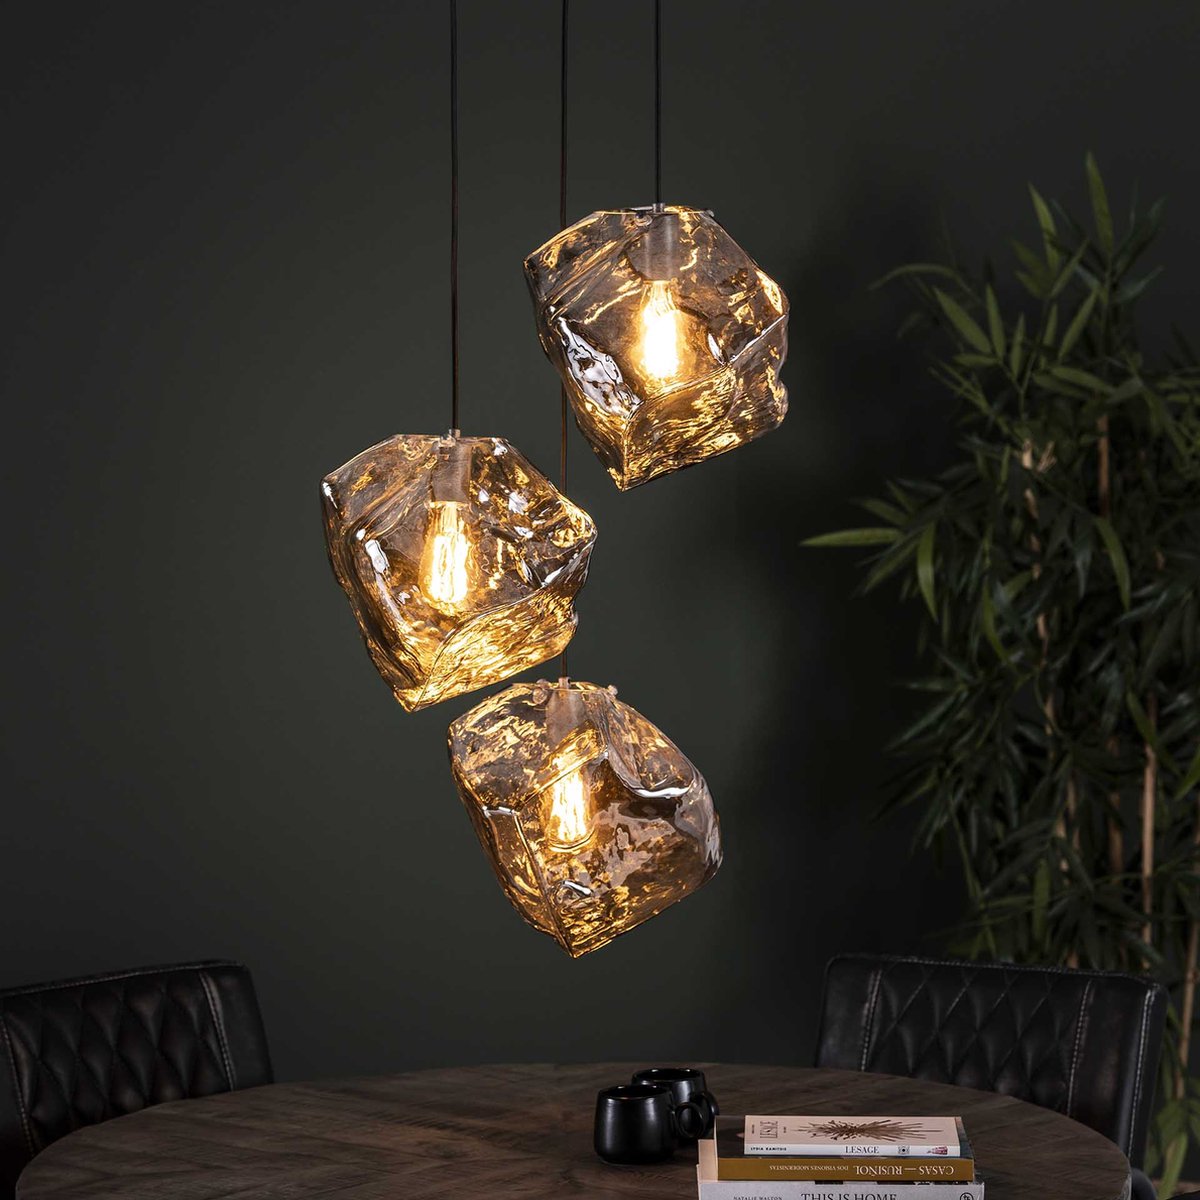 Hanglamp Rock Chromed getrapt | Ø 50 cm | 3 lichts | chroom / glazen bollen | in hoogte verstelbaar tot 150 cm | woonkamer / eetkamer | modern design